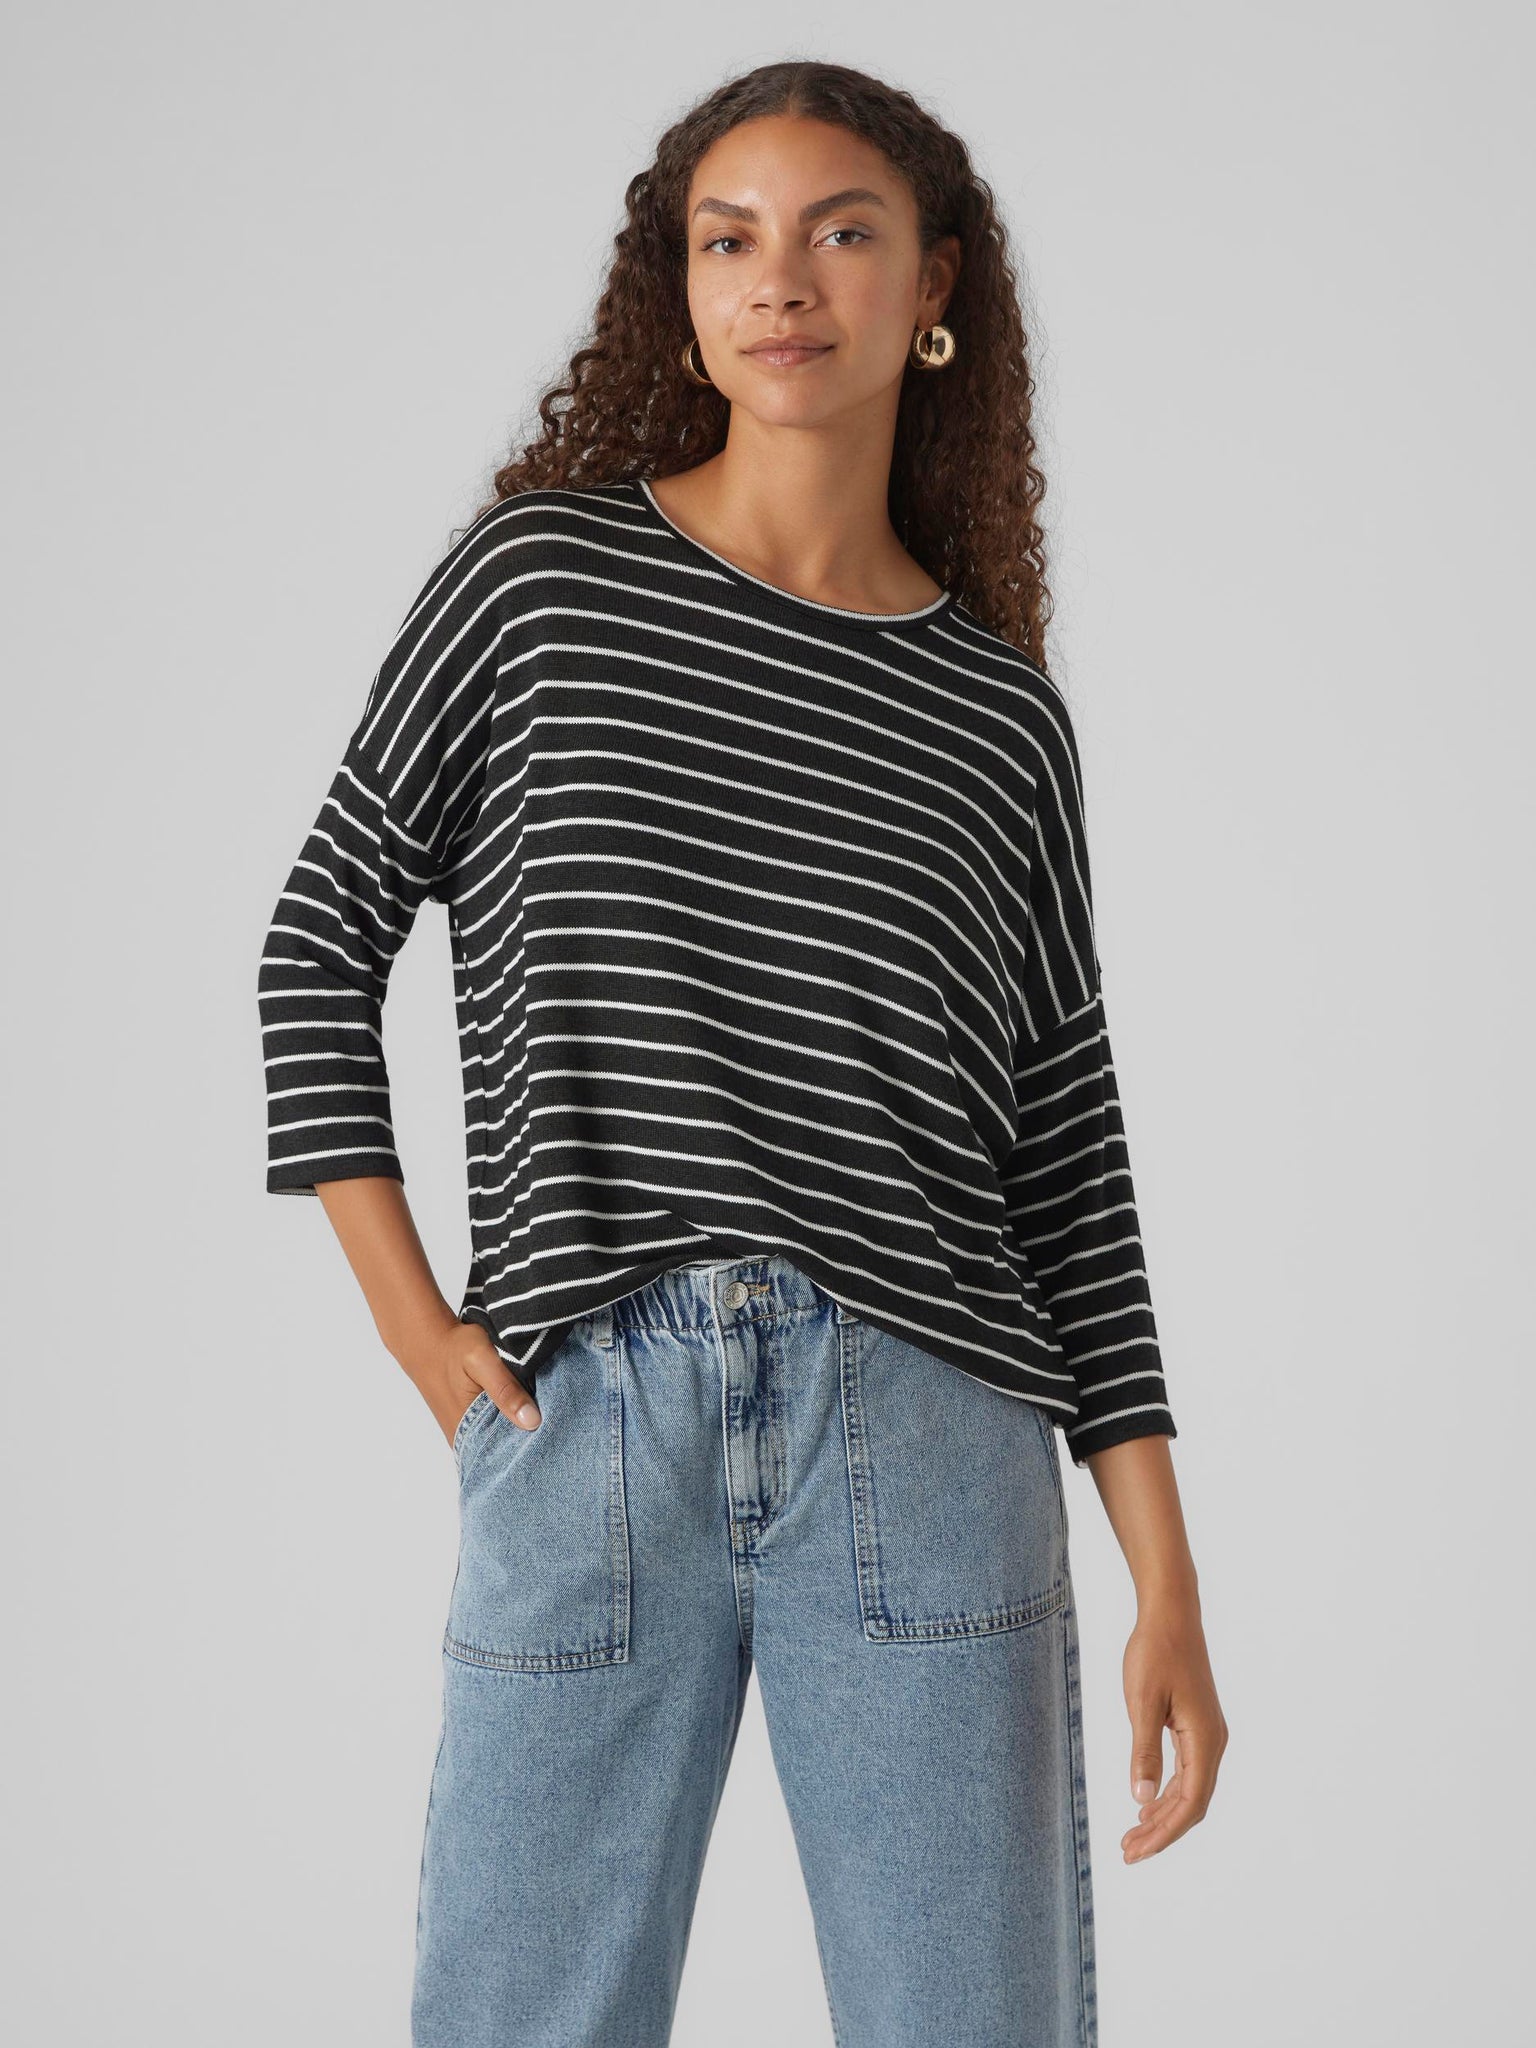 Vero Moda Striped Loose Fit 3/4 Sleeve Pullover in Black